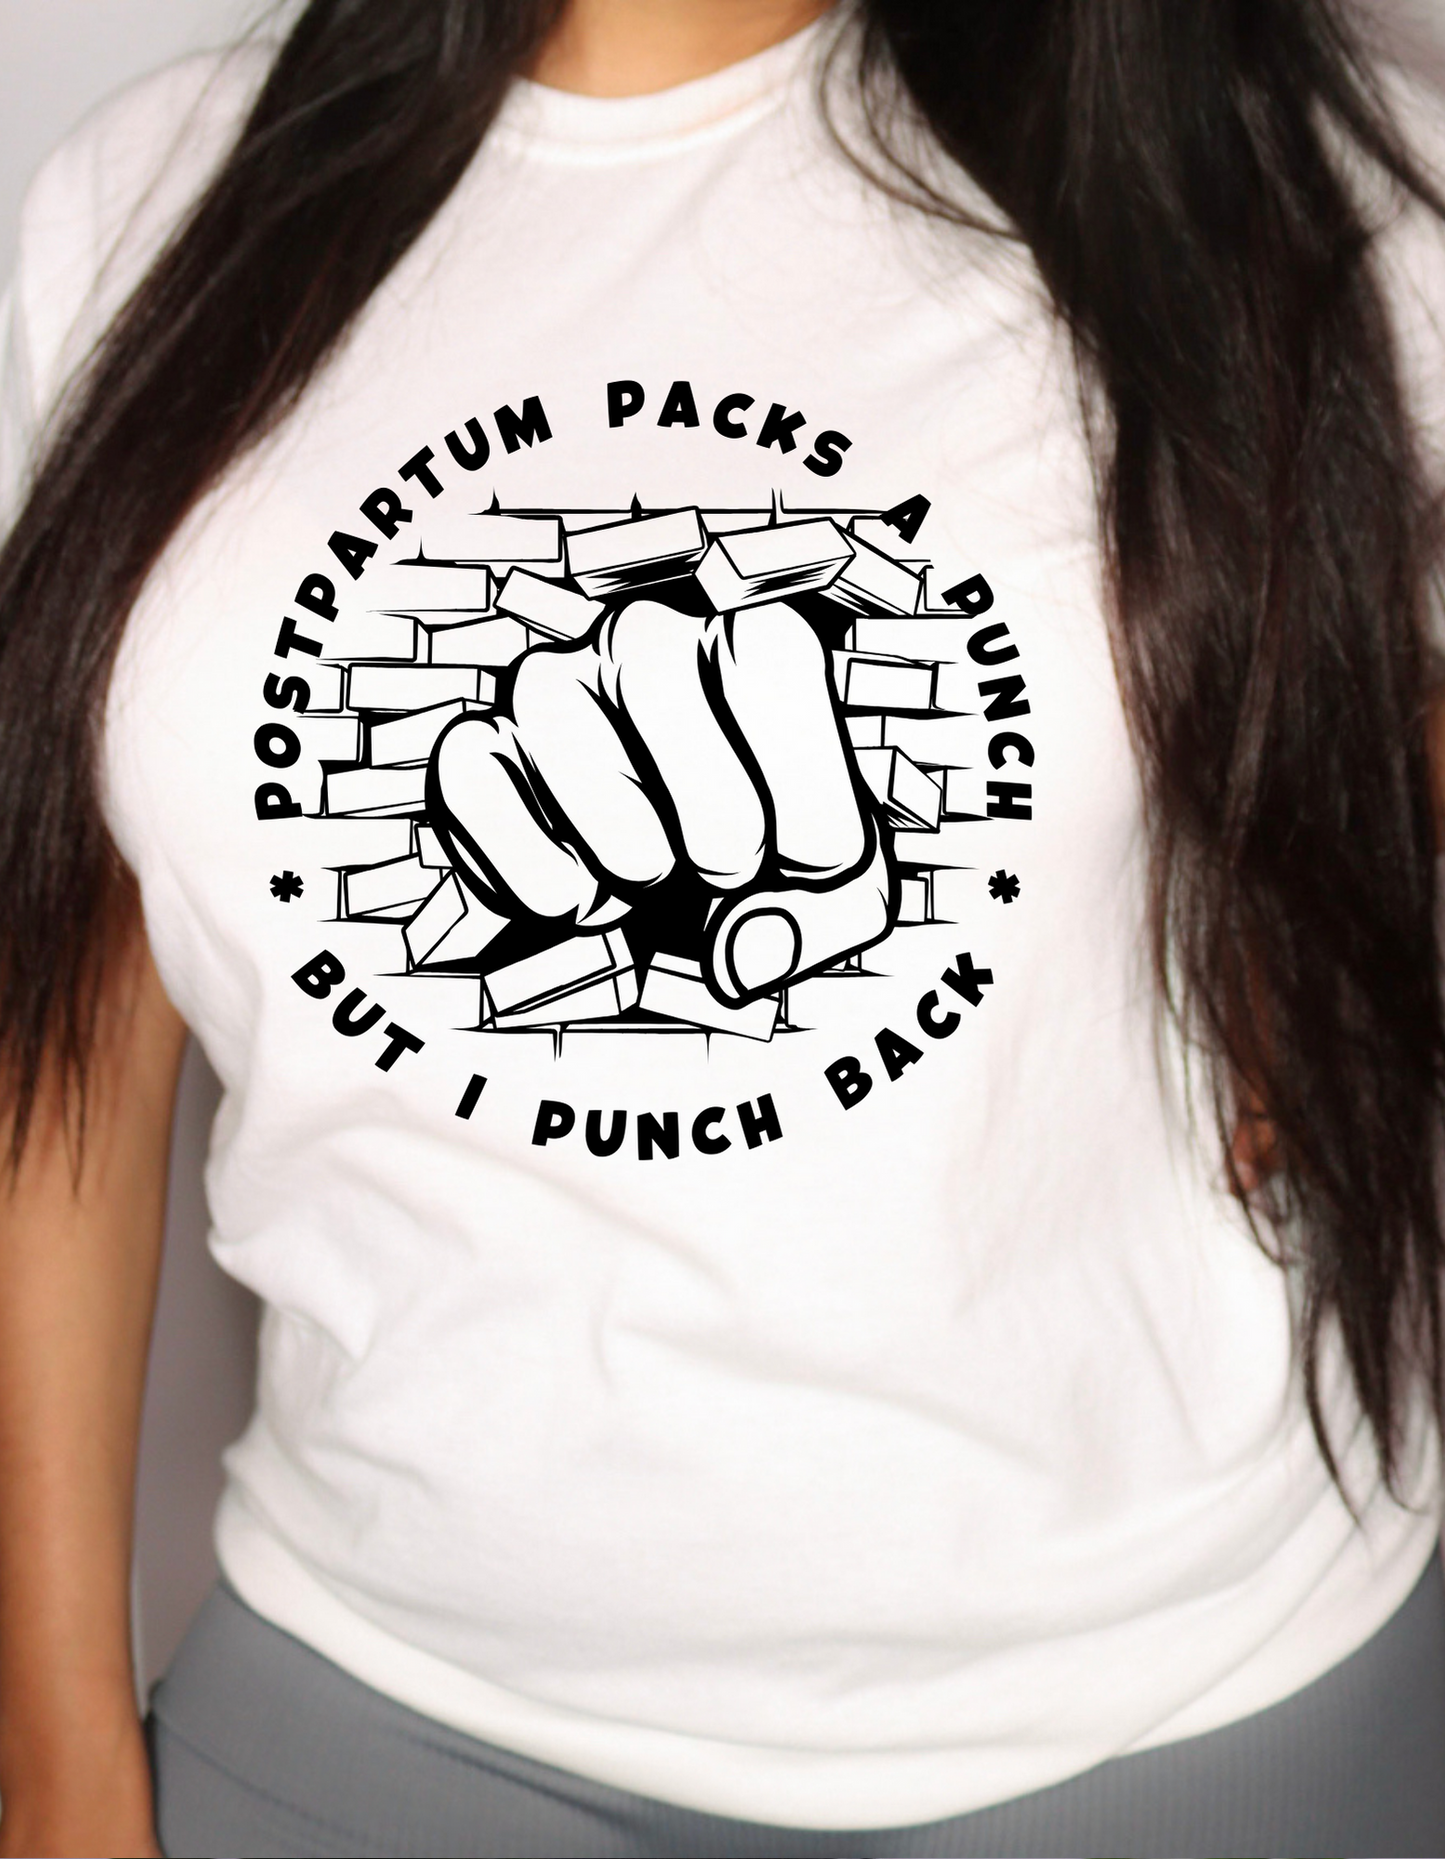 Postpartum Packs A Punch But I Punch Back